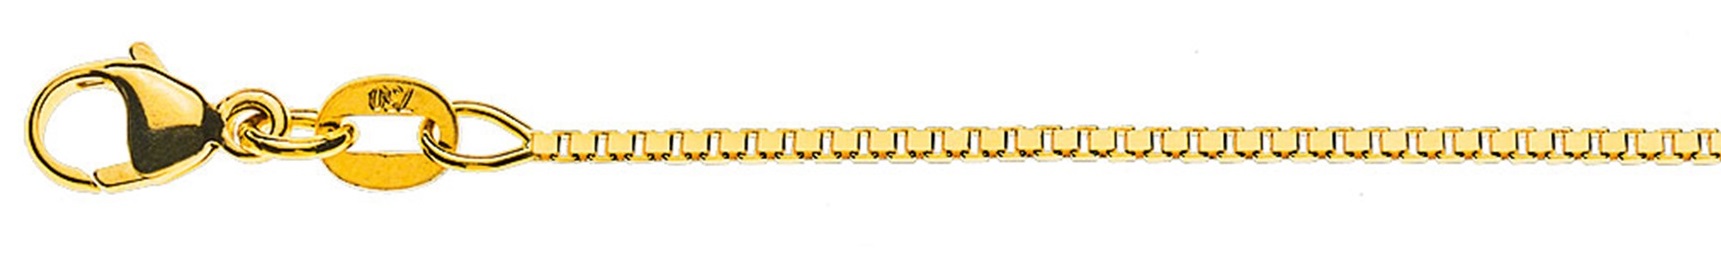 AURONOS Prestige Necklace yellow gold 18K Venetian chain diamond 42cm 1.1mm